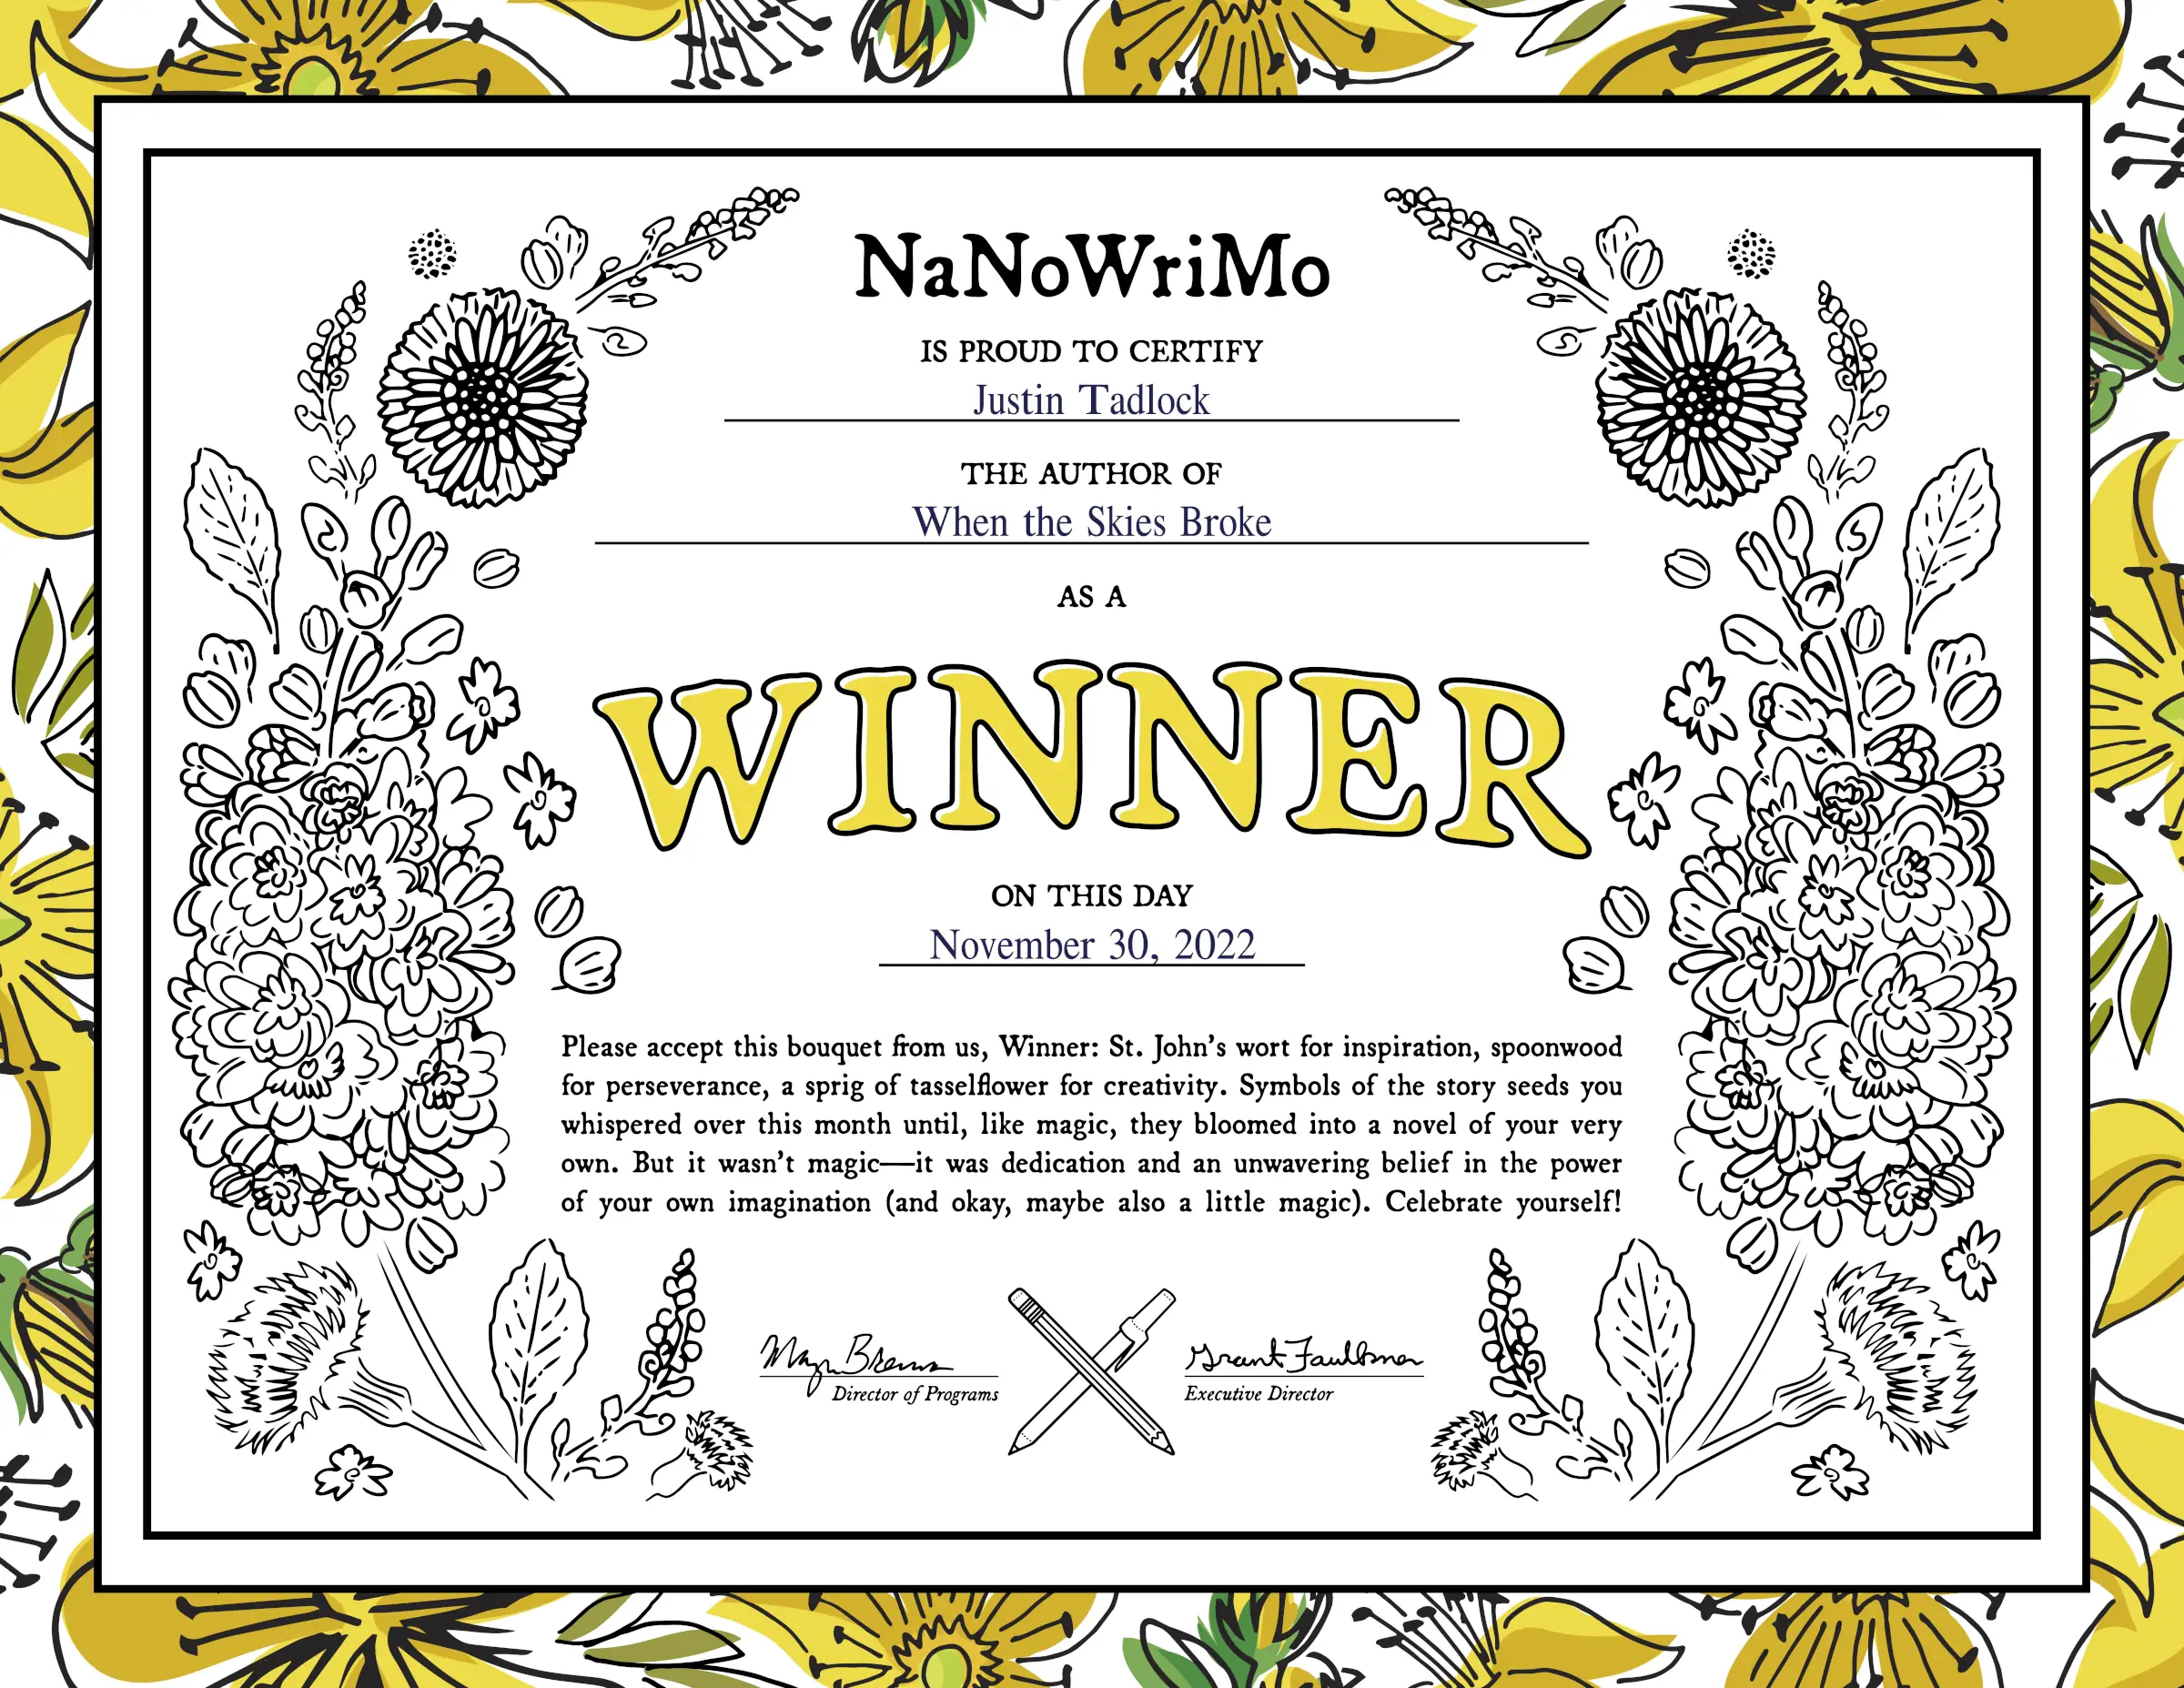 Certificate that certifies Justin Tadlock won National Novel Writing Month 2022.